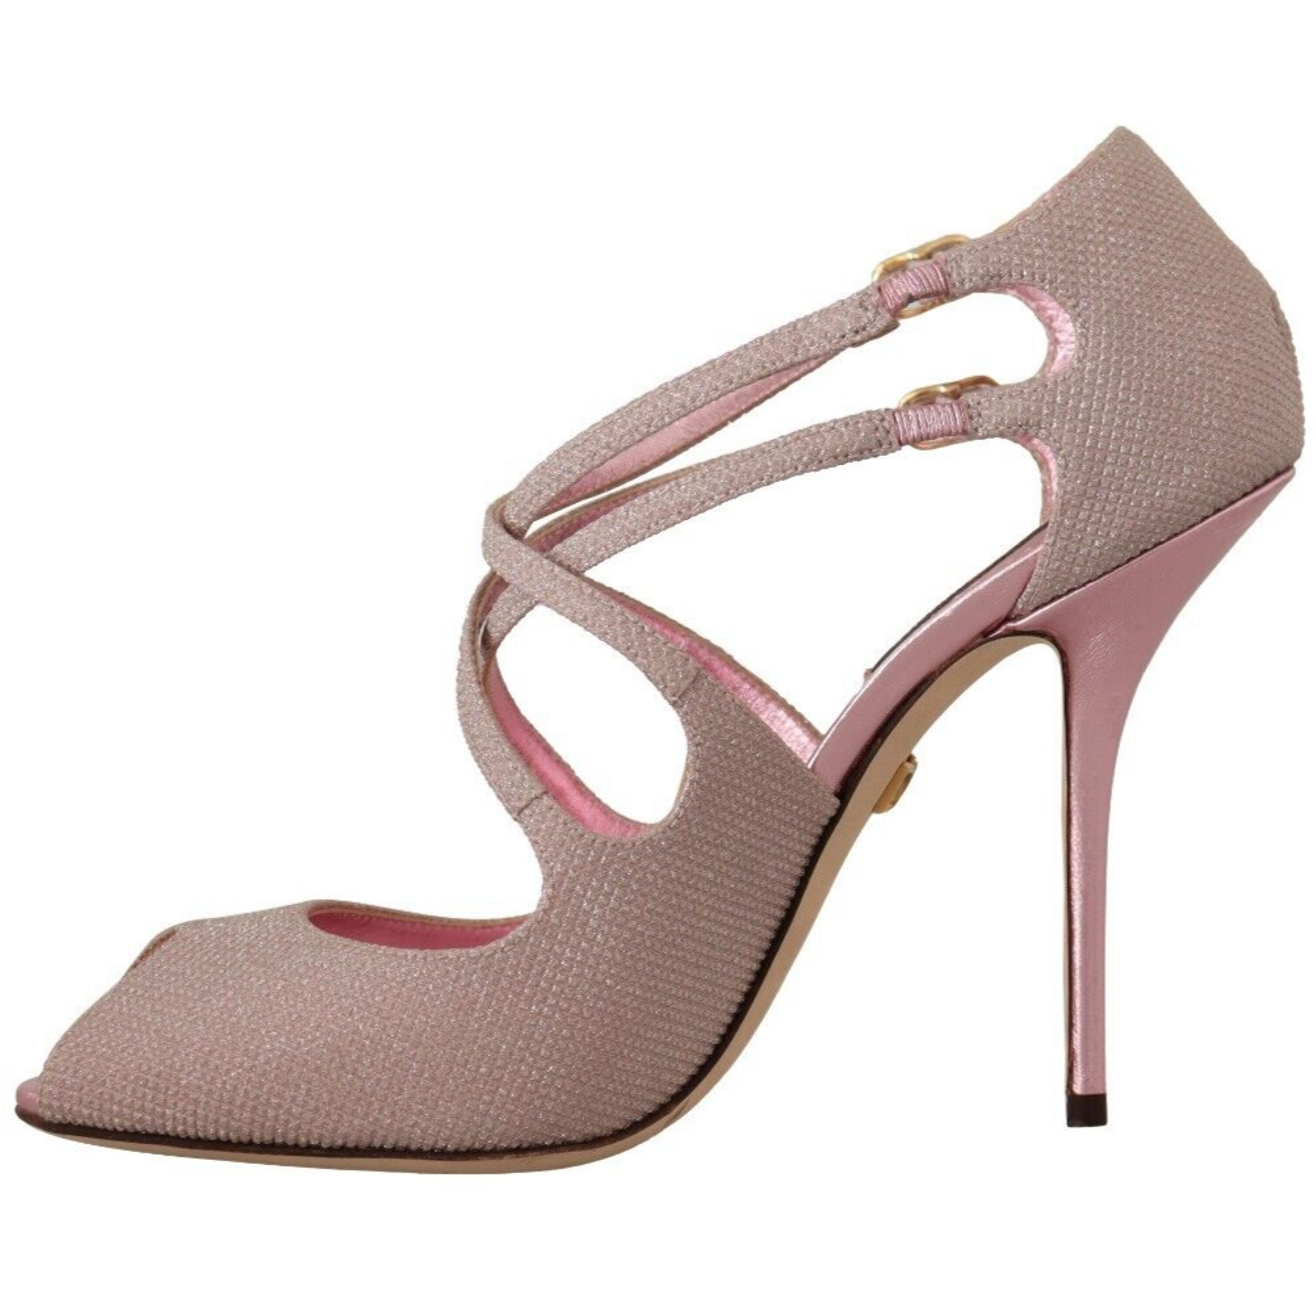 Dolce & Gabbana Pink Glitter Peep Toe High Heels Sandals pink-glittered-strappy-heels-sandals-shoes s-l1600-4-1-fbcfddcc-bc0.png